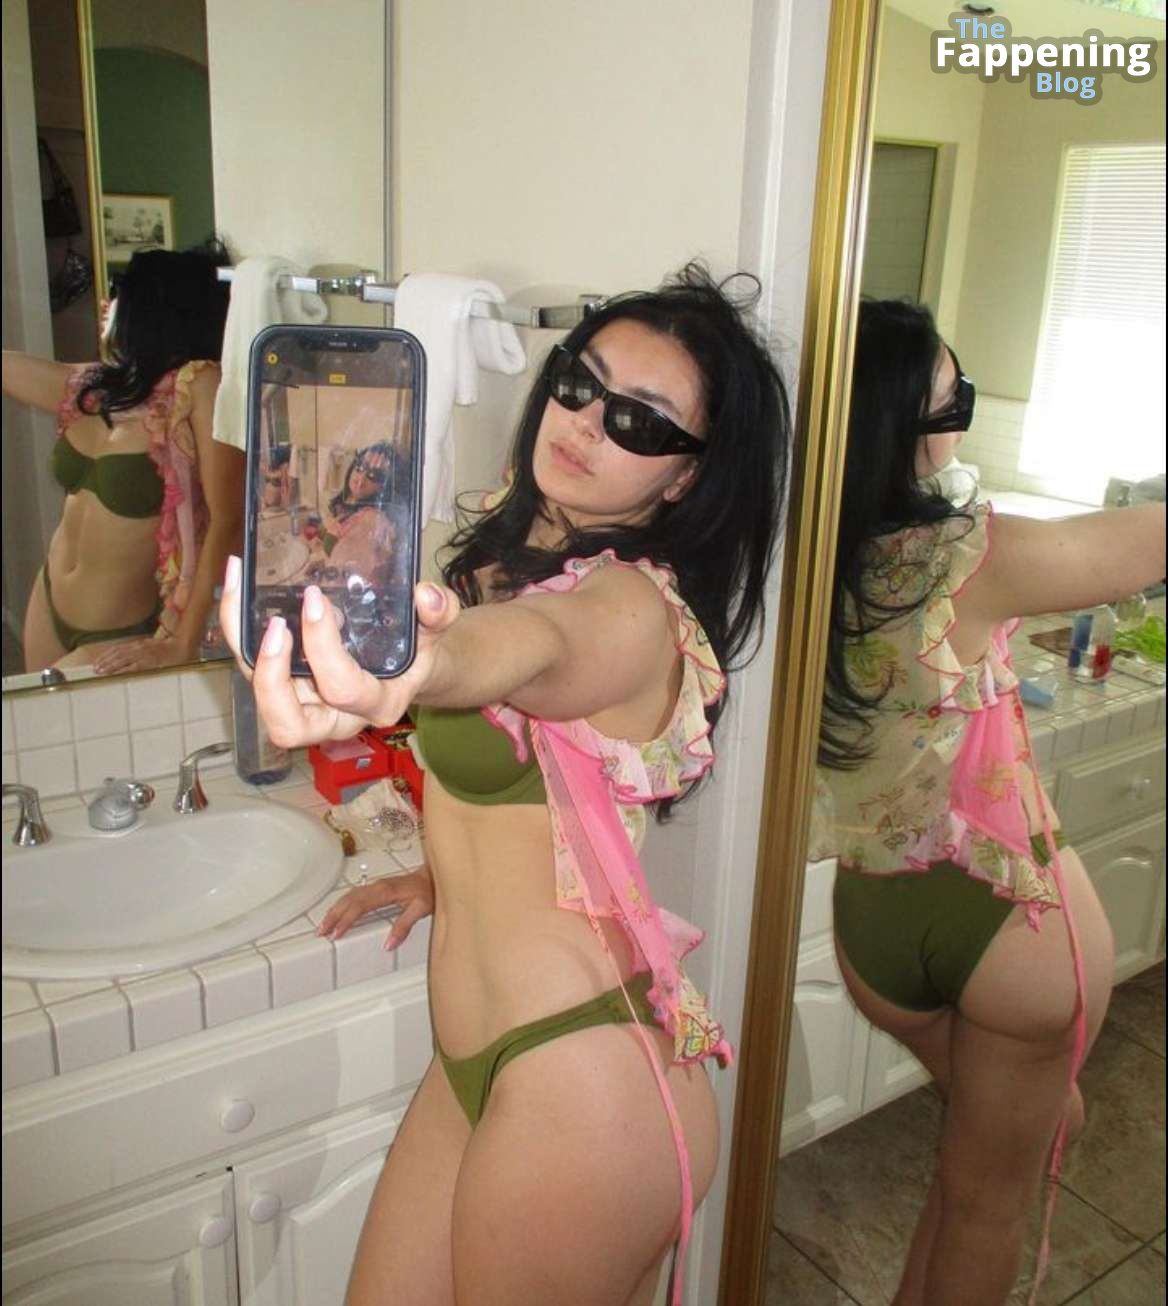 CHarli-XCX-Beautiful-Ass-in-Bikini-Selfie-thefappeningblog.com_.jpg